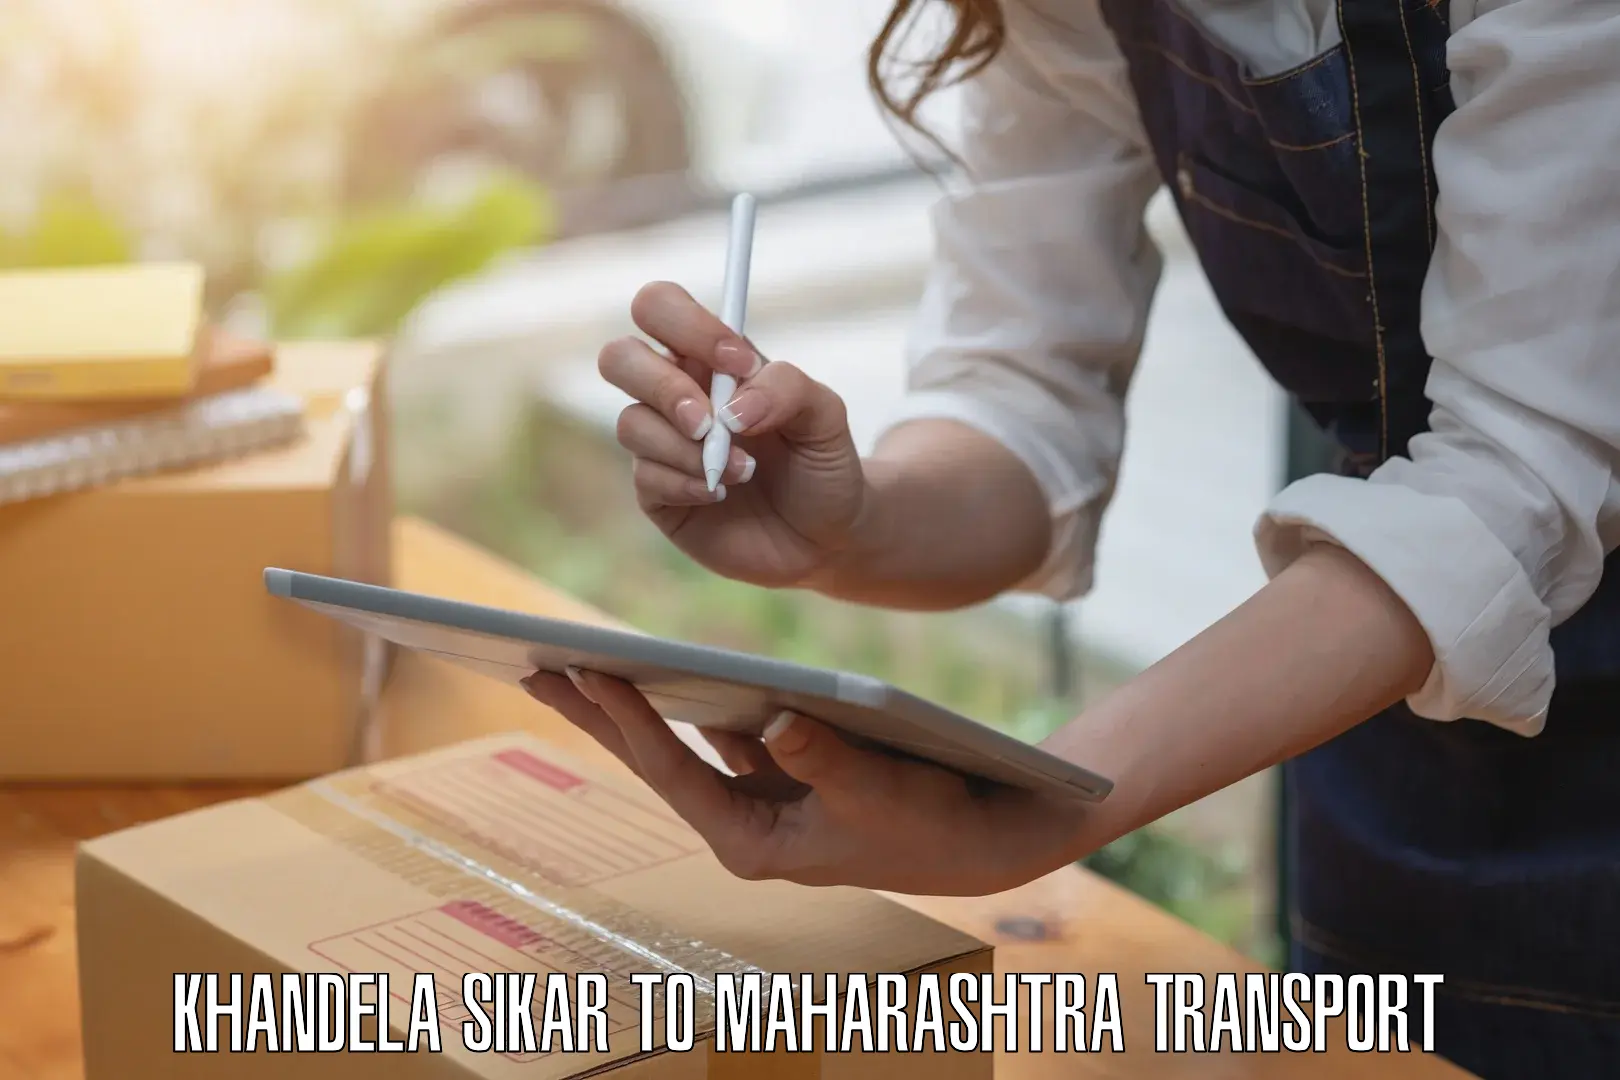 Nearest transport service Khandela Sikar to Maharashtra